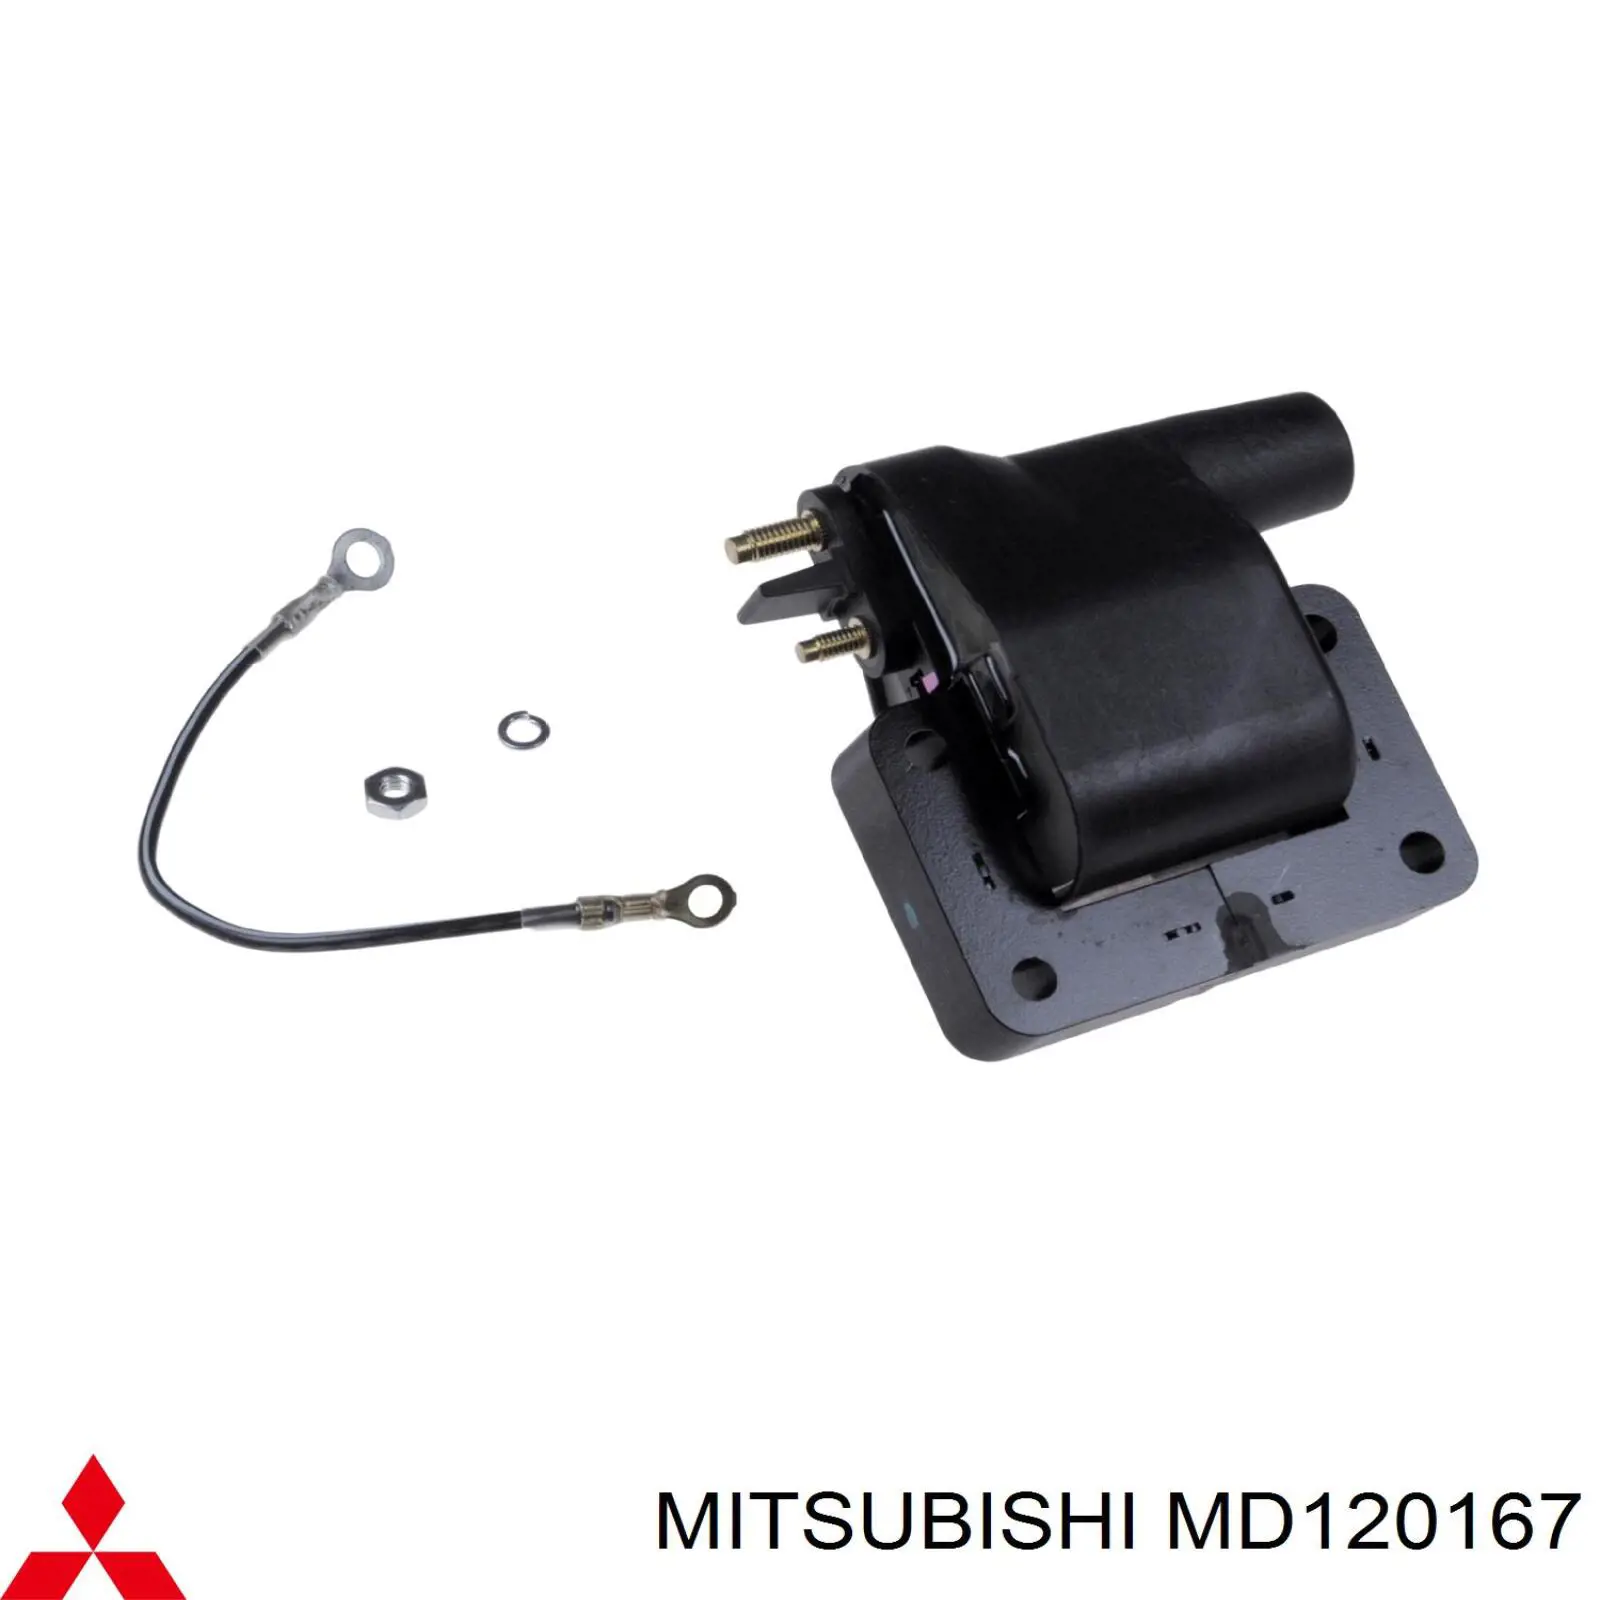 MD120167 Mitsubishi bobina